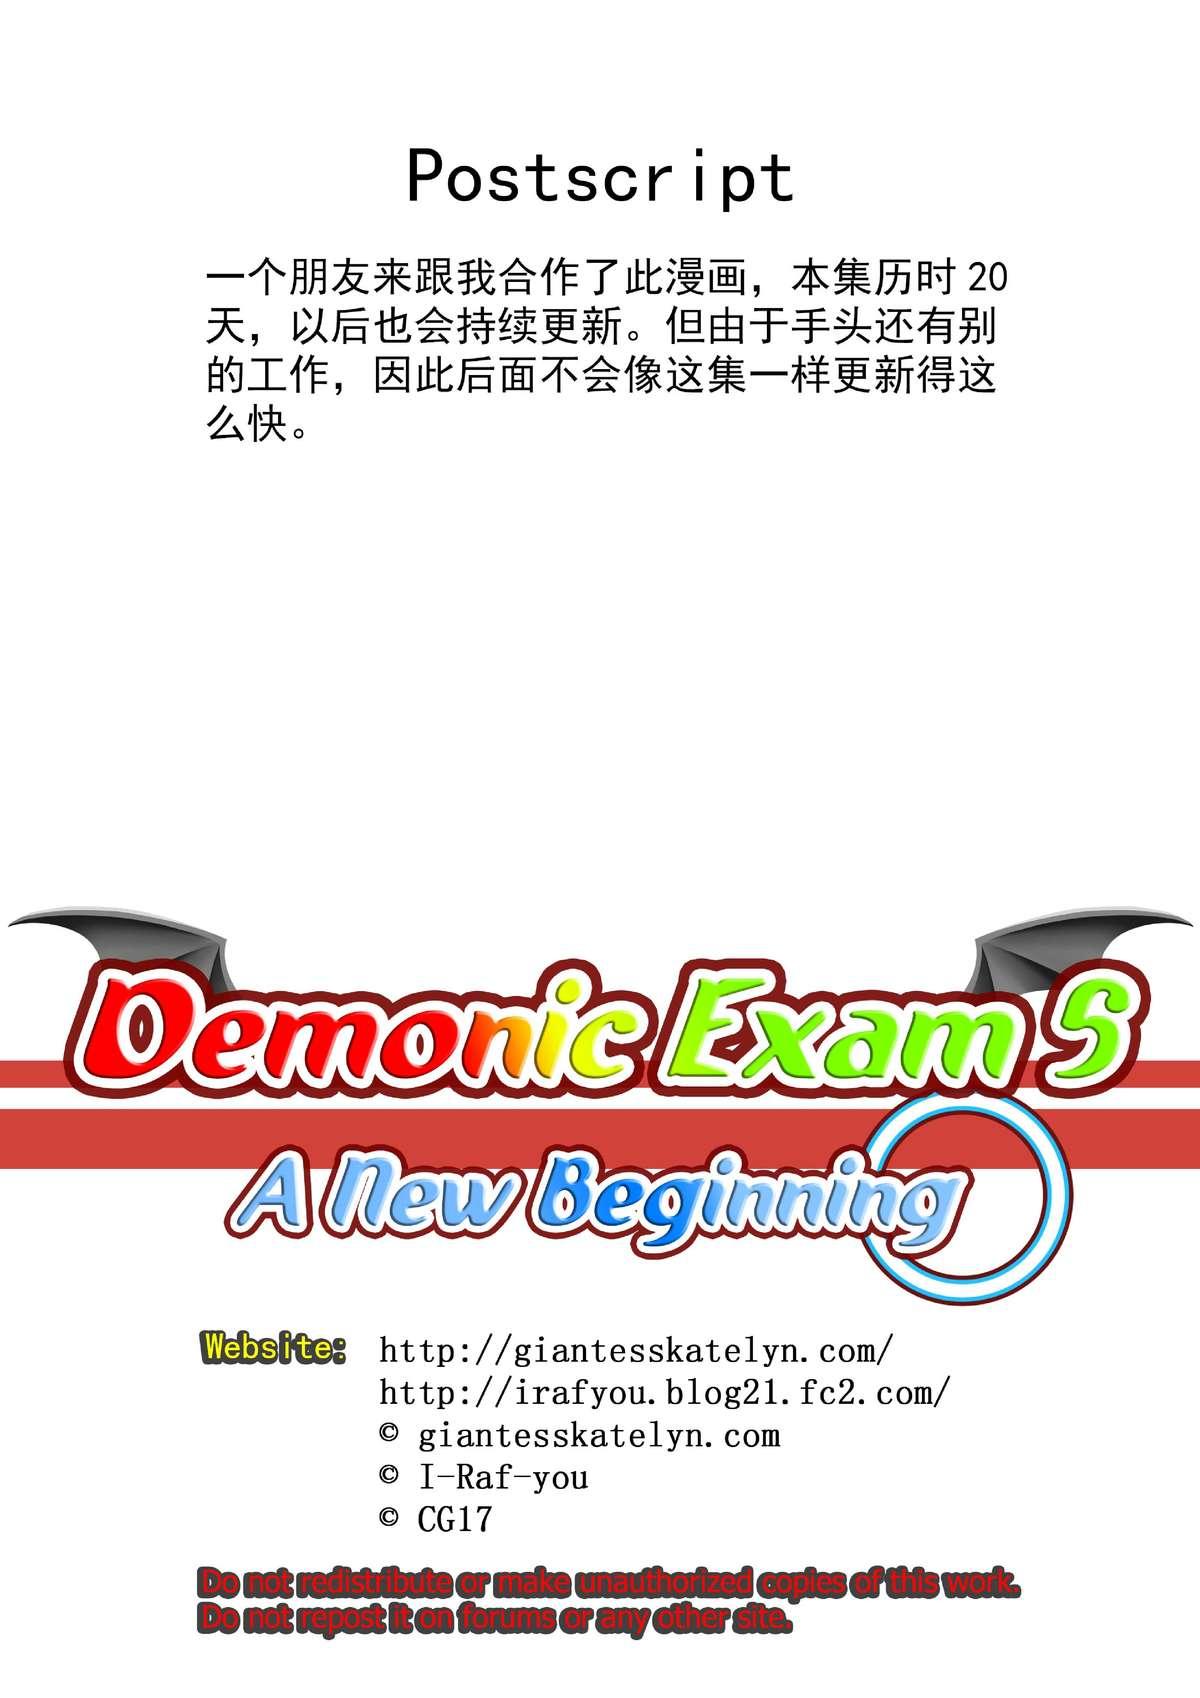 Demonic Exam 5 A New Beginning 28